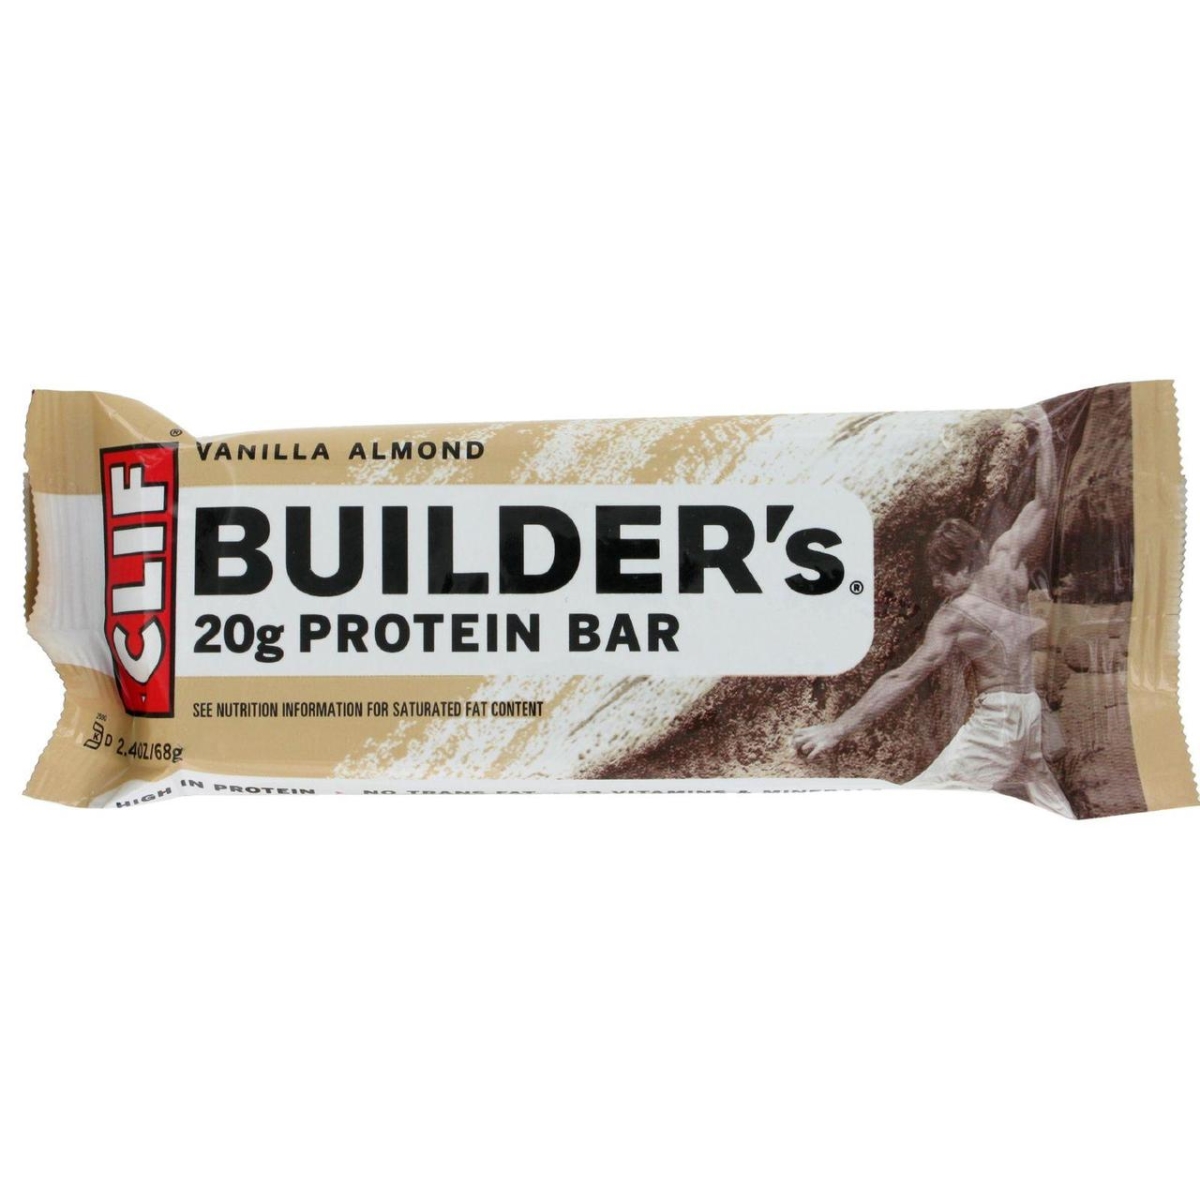 Clif Bar Hg0104927 2.4 Oz Vanilla Almond Builder Bar - Case Of 12